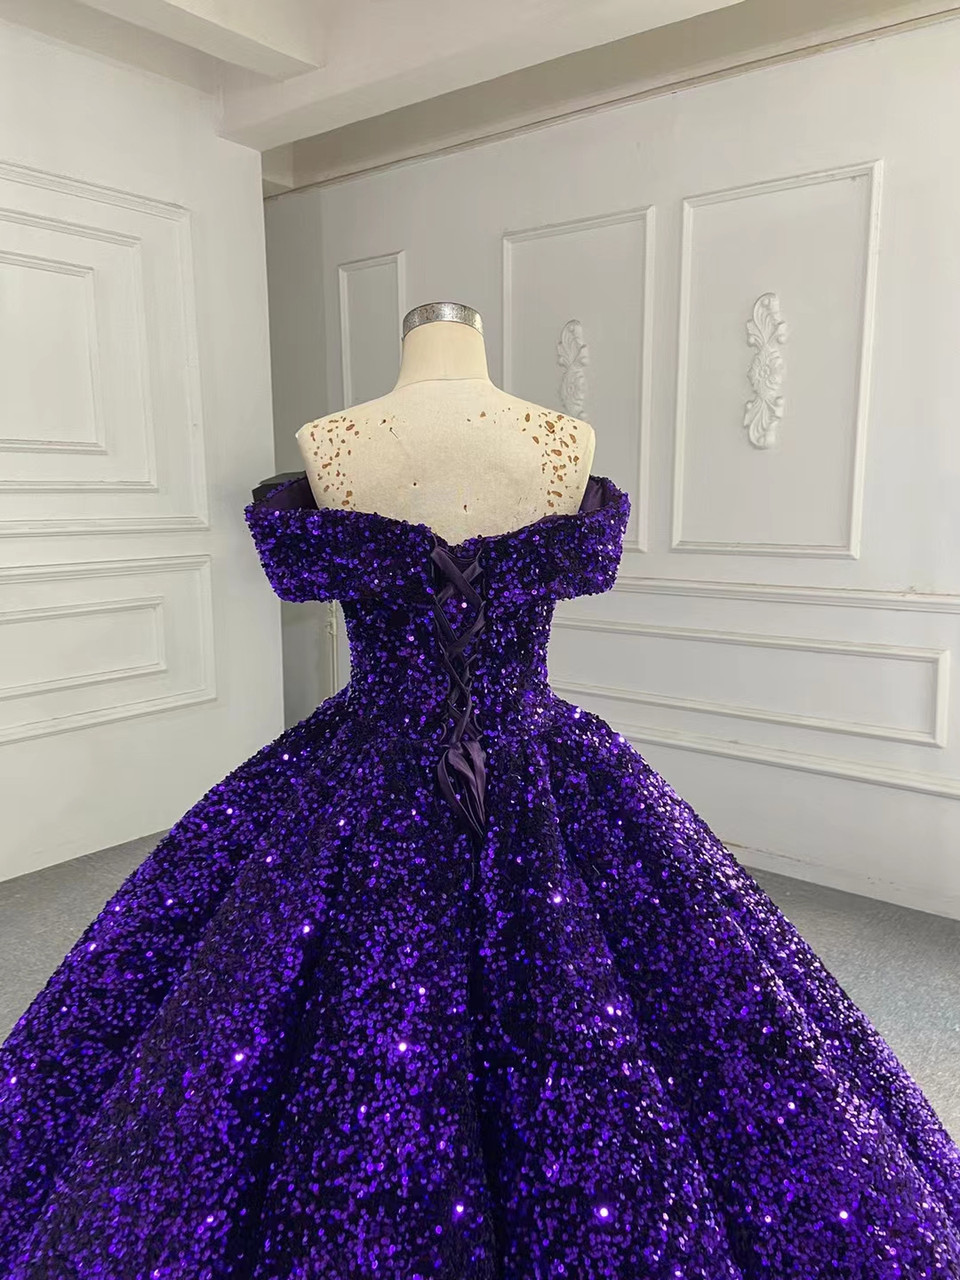 A stunning purple tontithios ballgown on a dress form on Craiyon